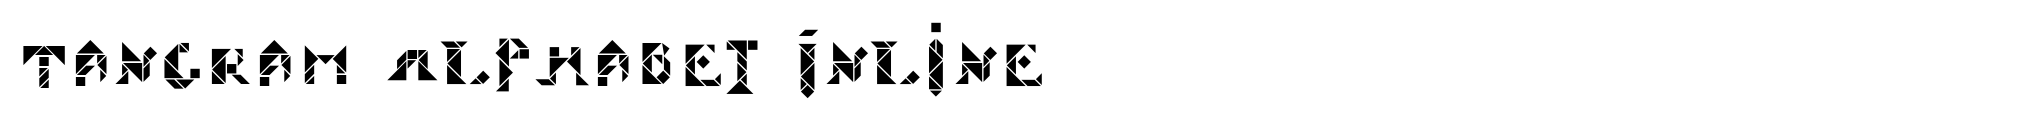 Tangram Alphabet Inline image